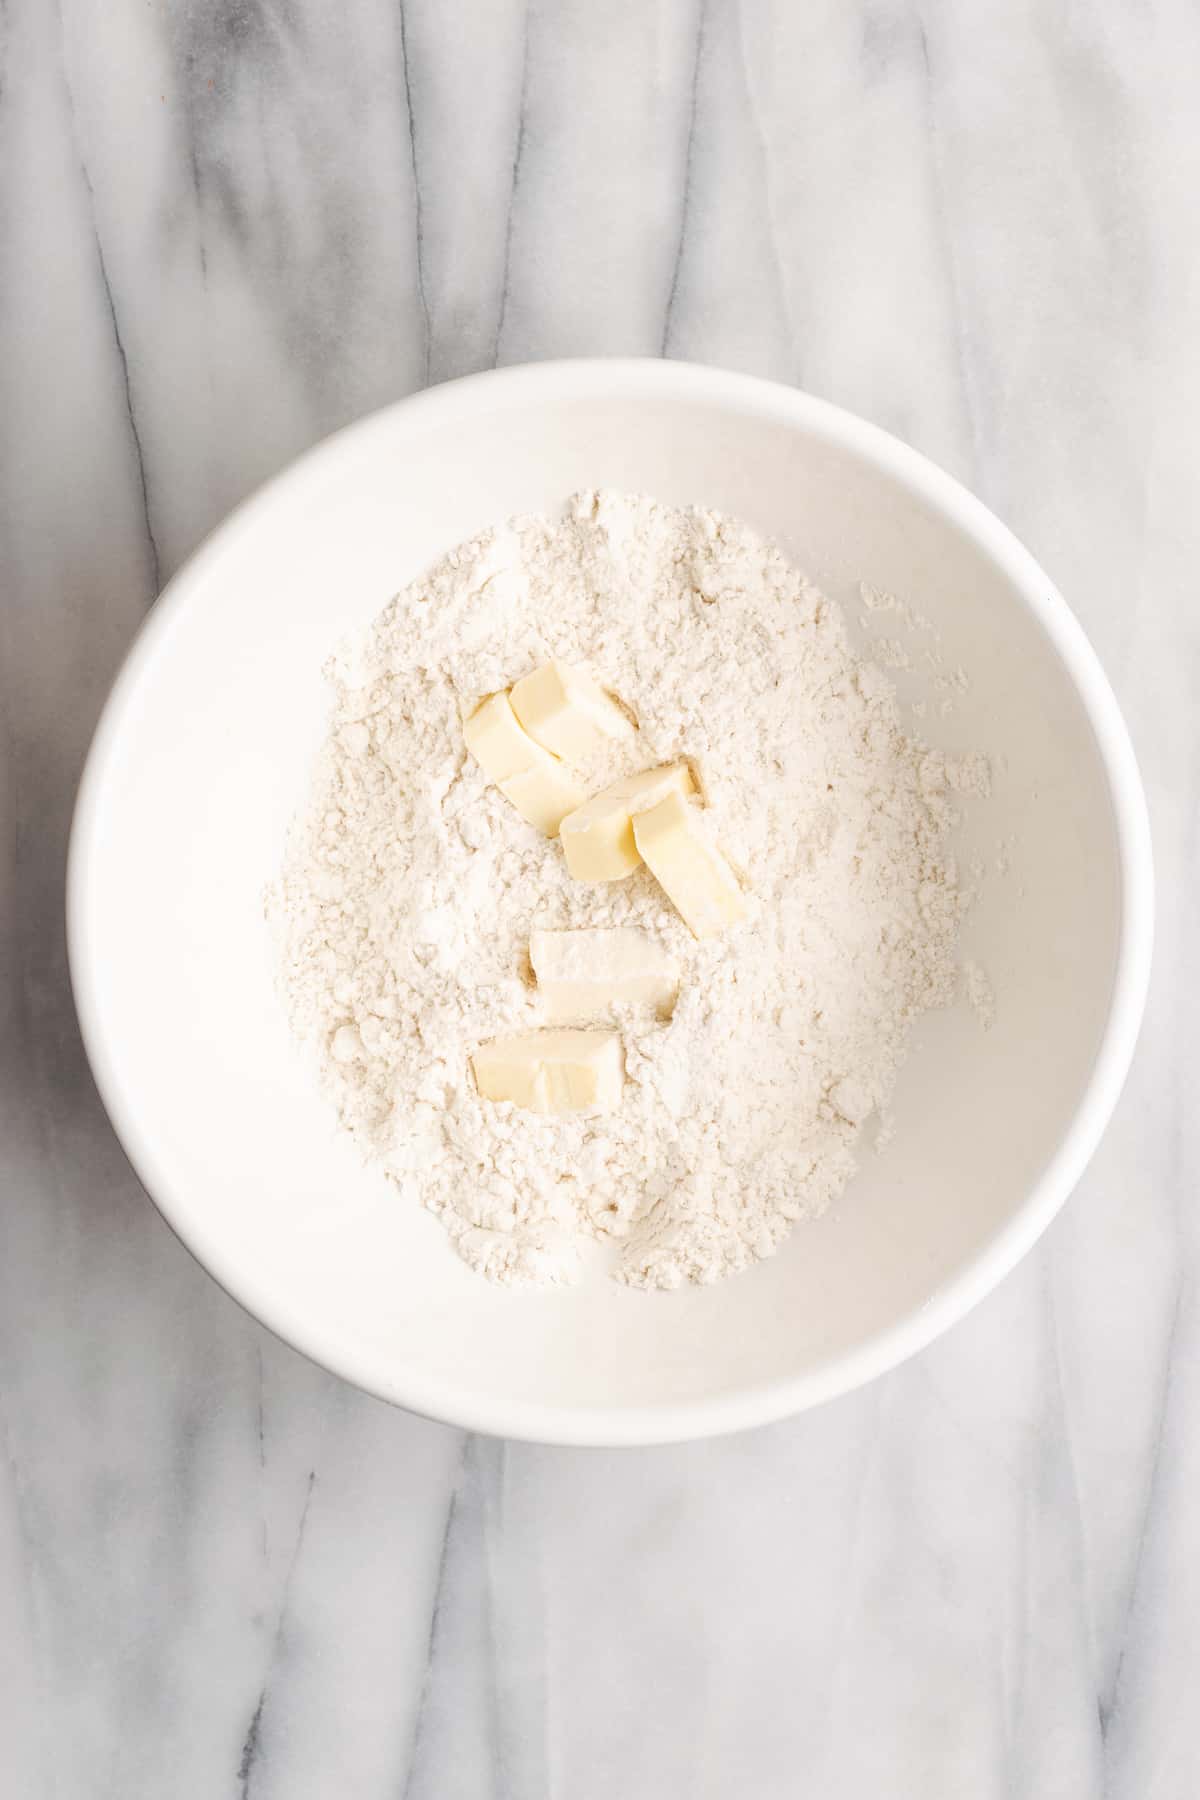 A mixing bowl with flour, salt, sugar, and chunks of vegan butter